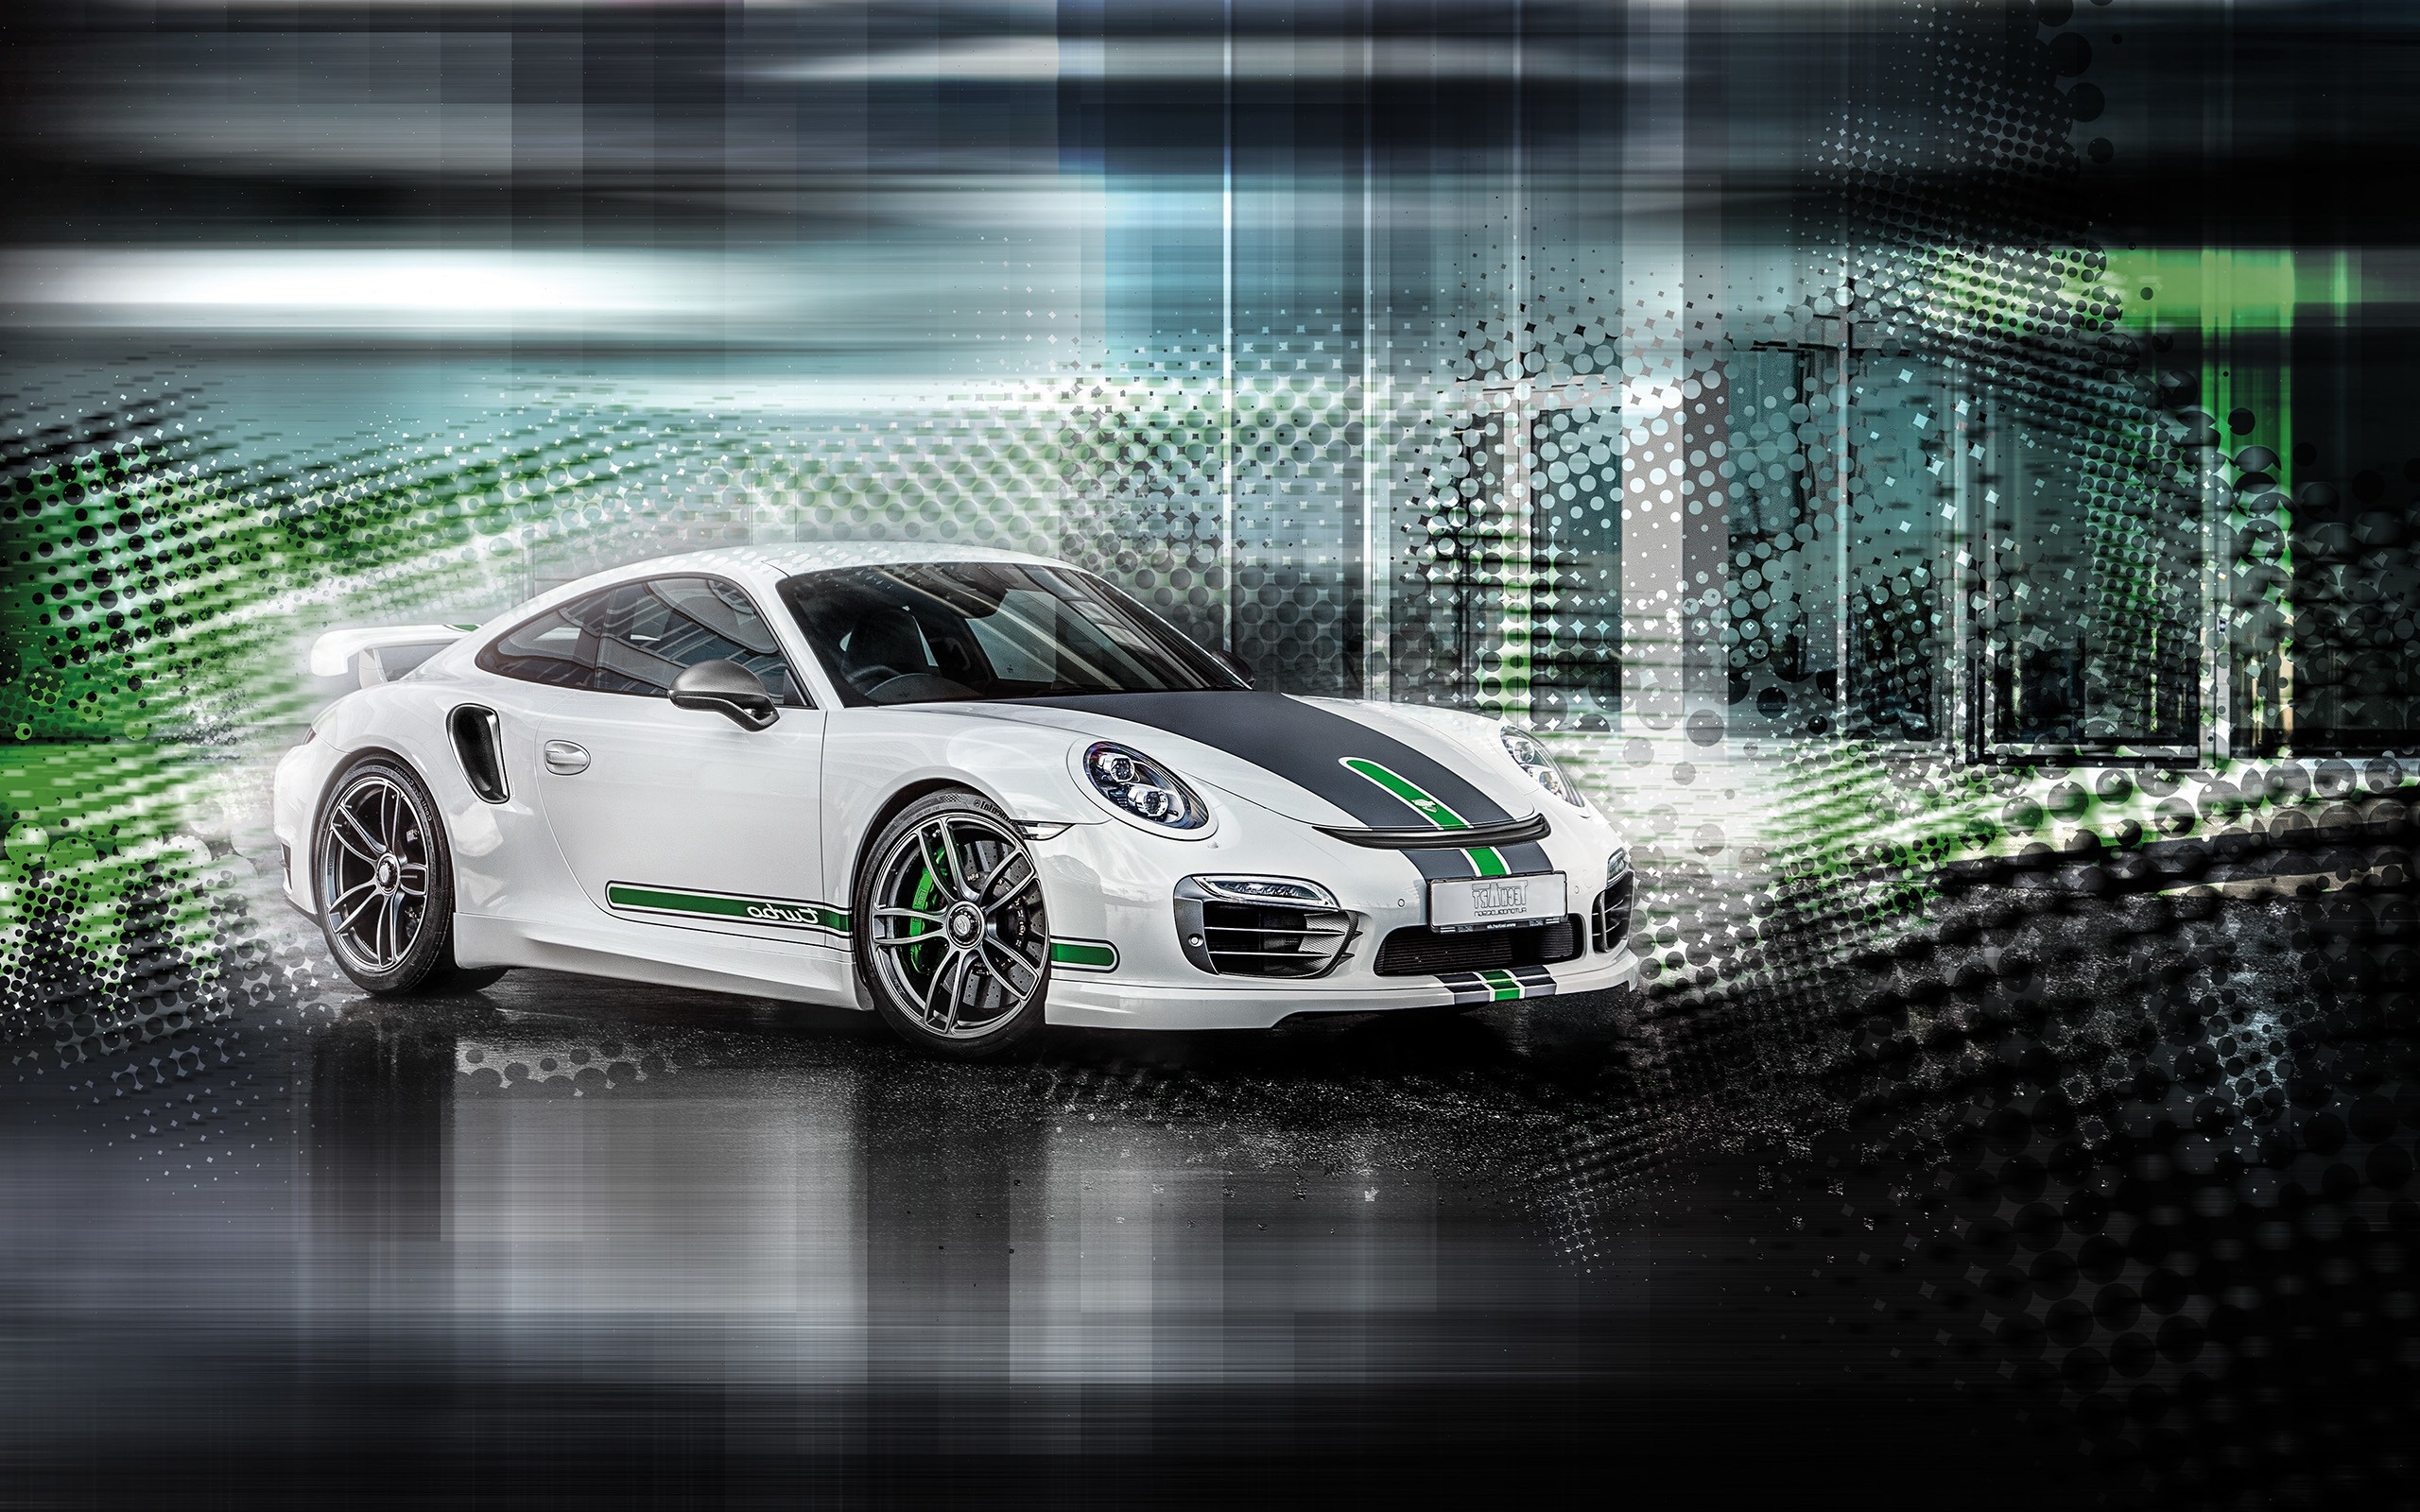 Картинка с Porsche 911 на абстрактном фоне